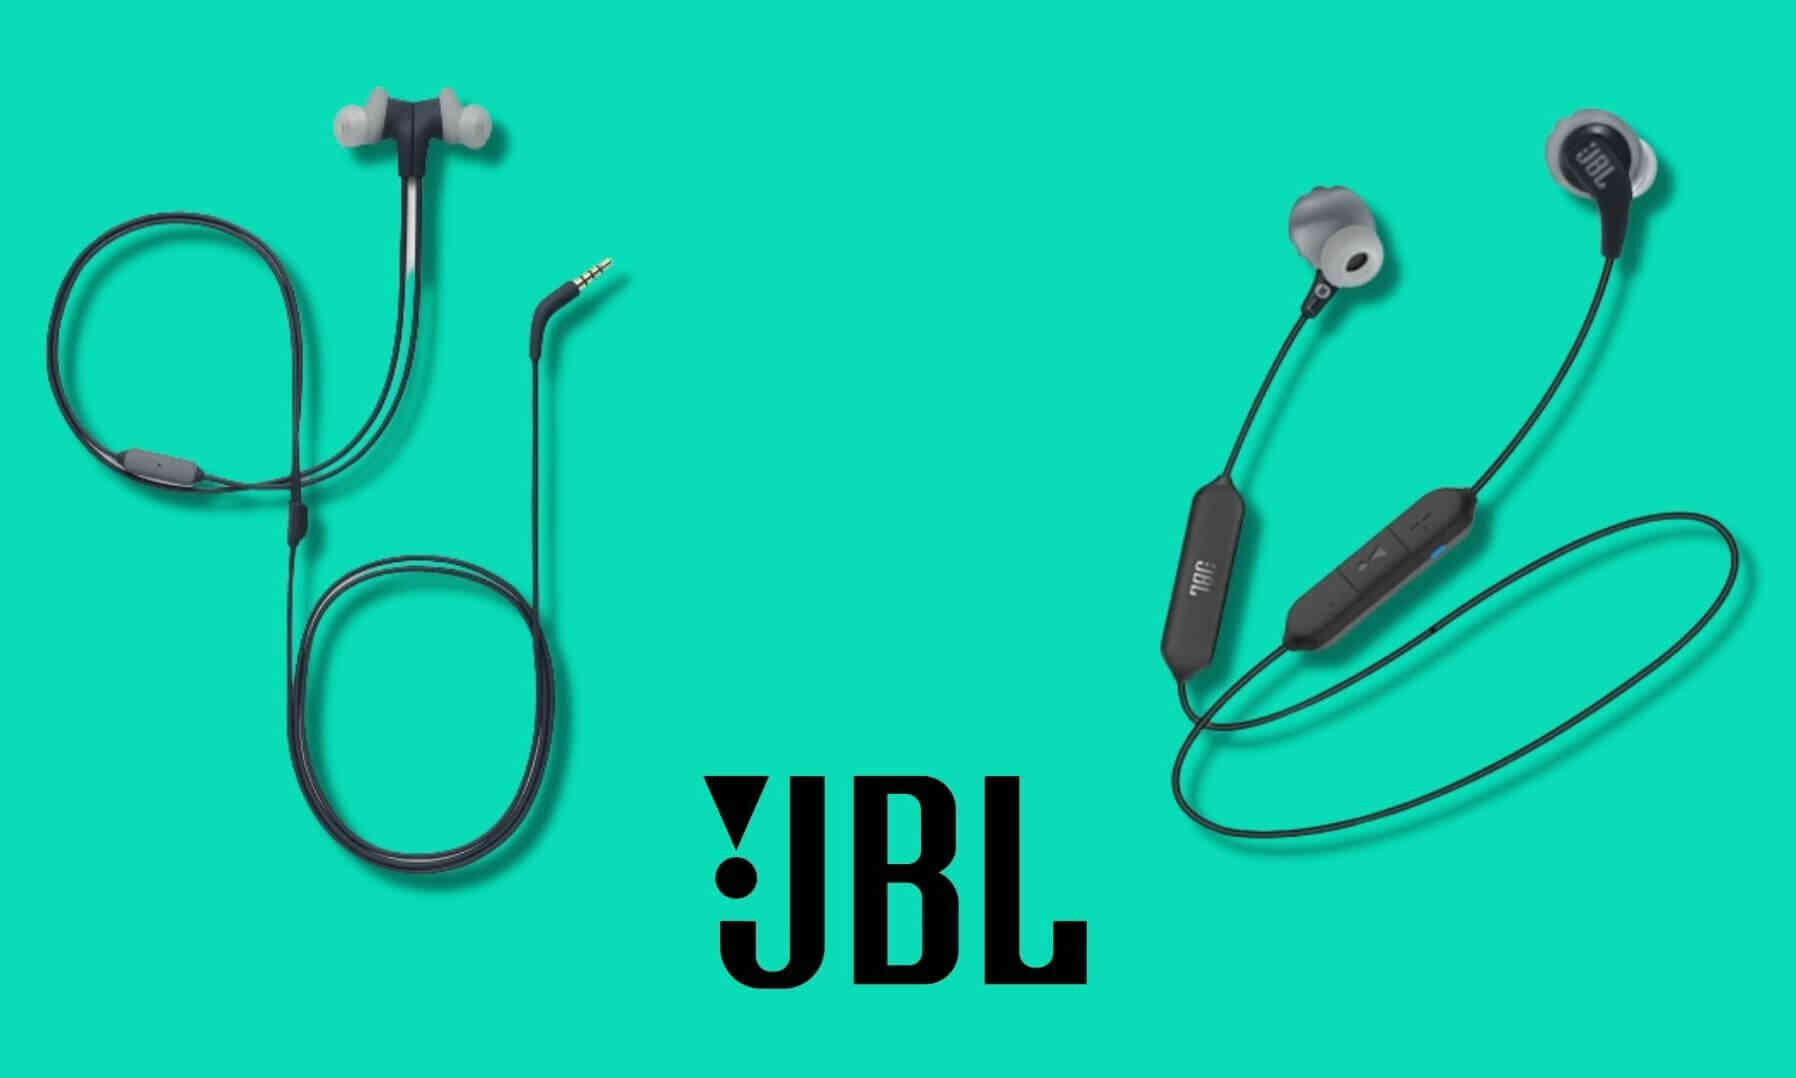 Is JBL a Good Brand for Earphones